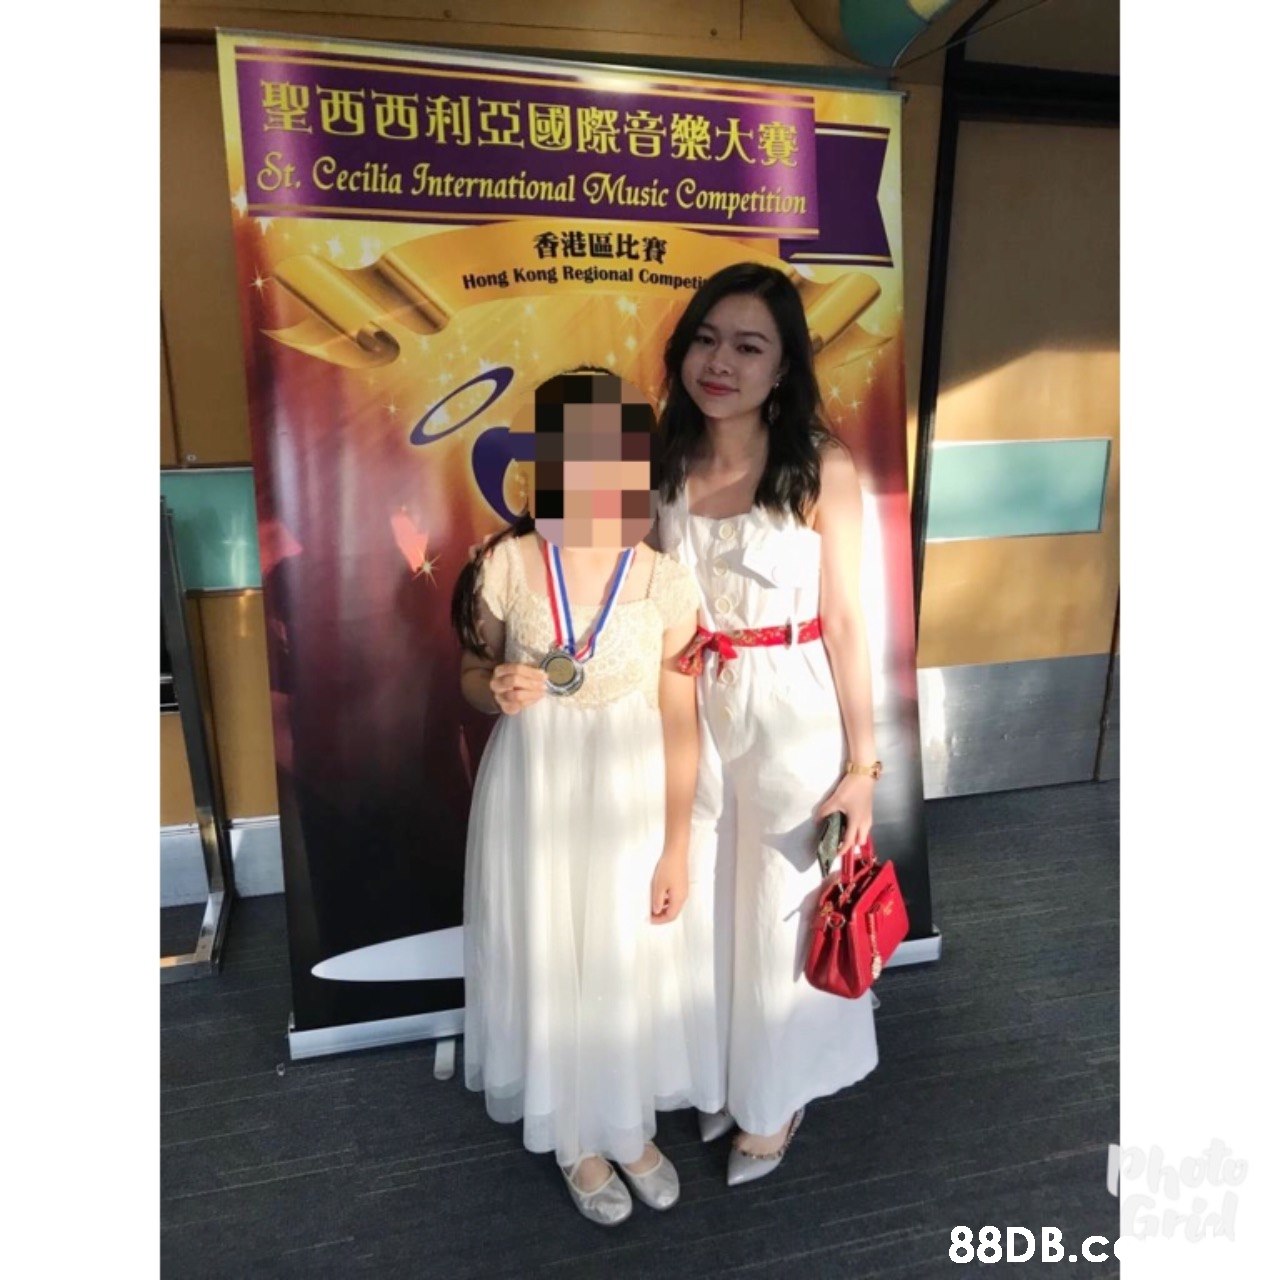 聖西西利亞國際音樂大賽 St.Cecilia International Music Competition 香港區比賽 Hong Kong Regional Competi Phoie 88DB.c  Dress,